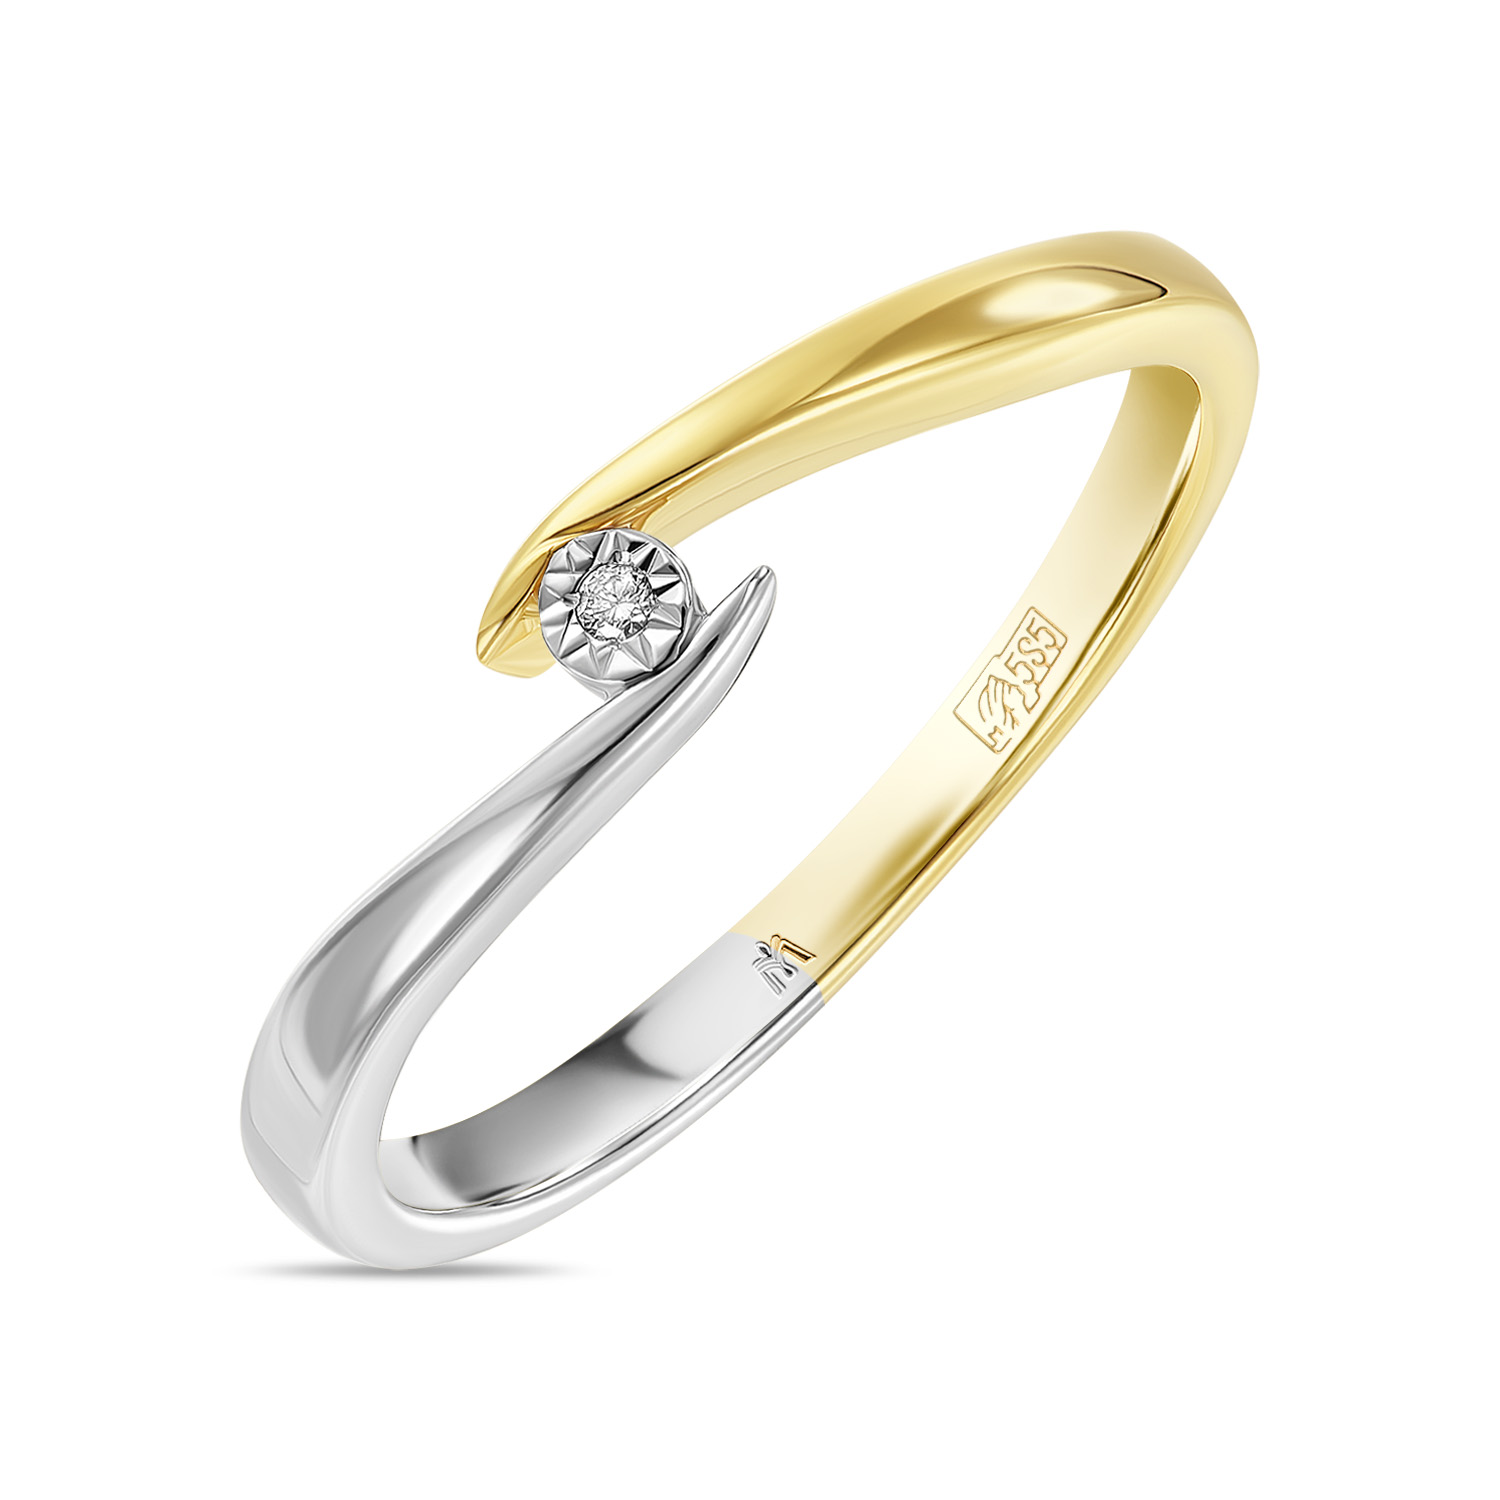 Золотое кольцо c бриллиантами, цвет желто-белый - фото 1